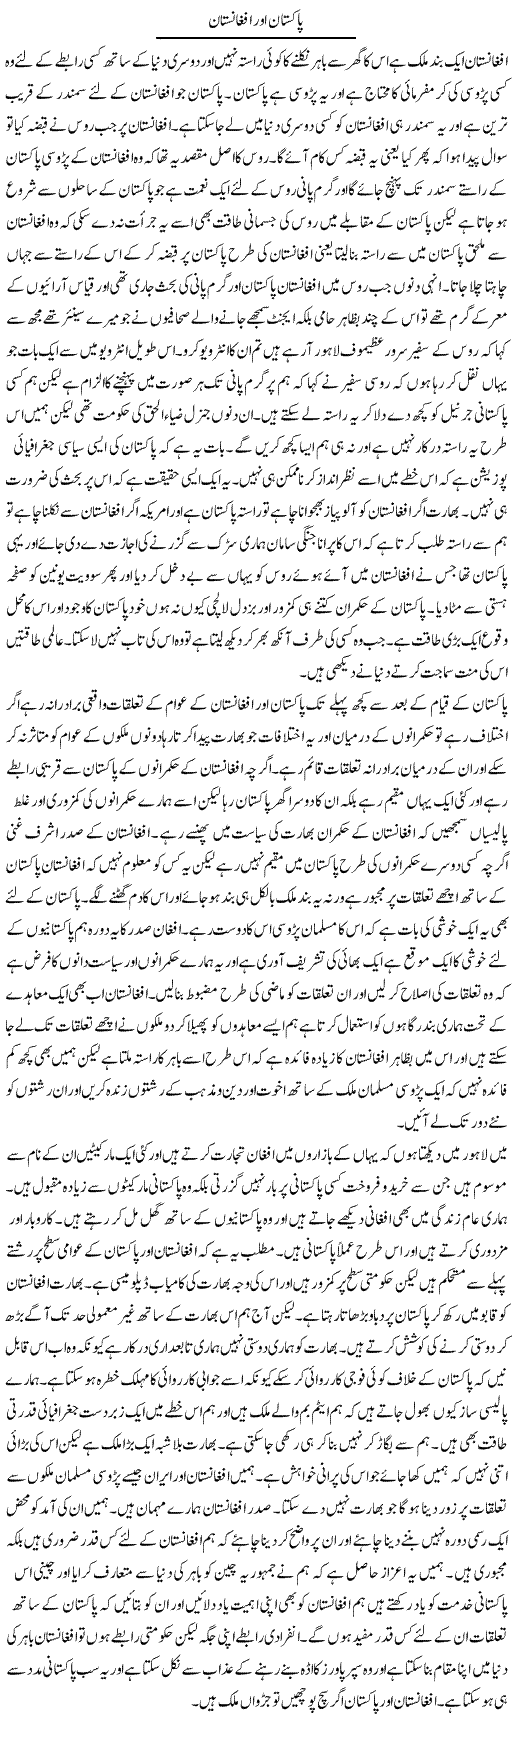 Pakistan Aur Afghanistan | Abdul Qadir Hassan | Daily Urdu Columns